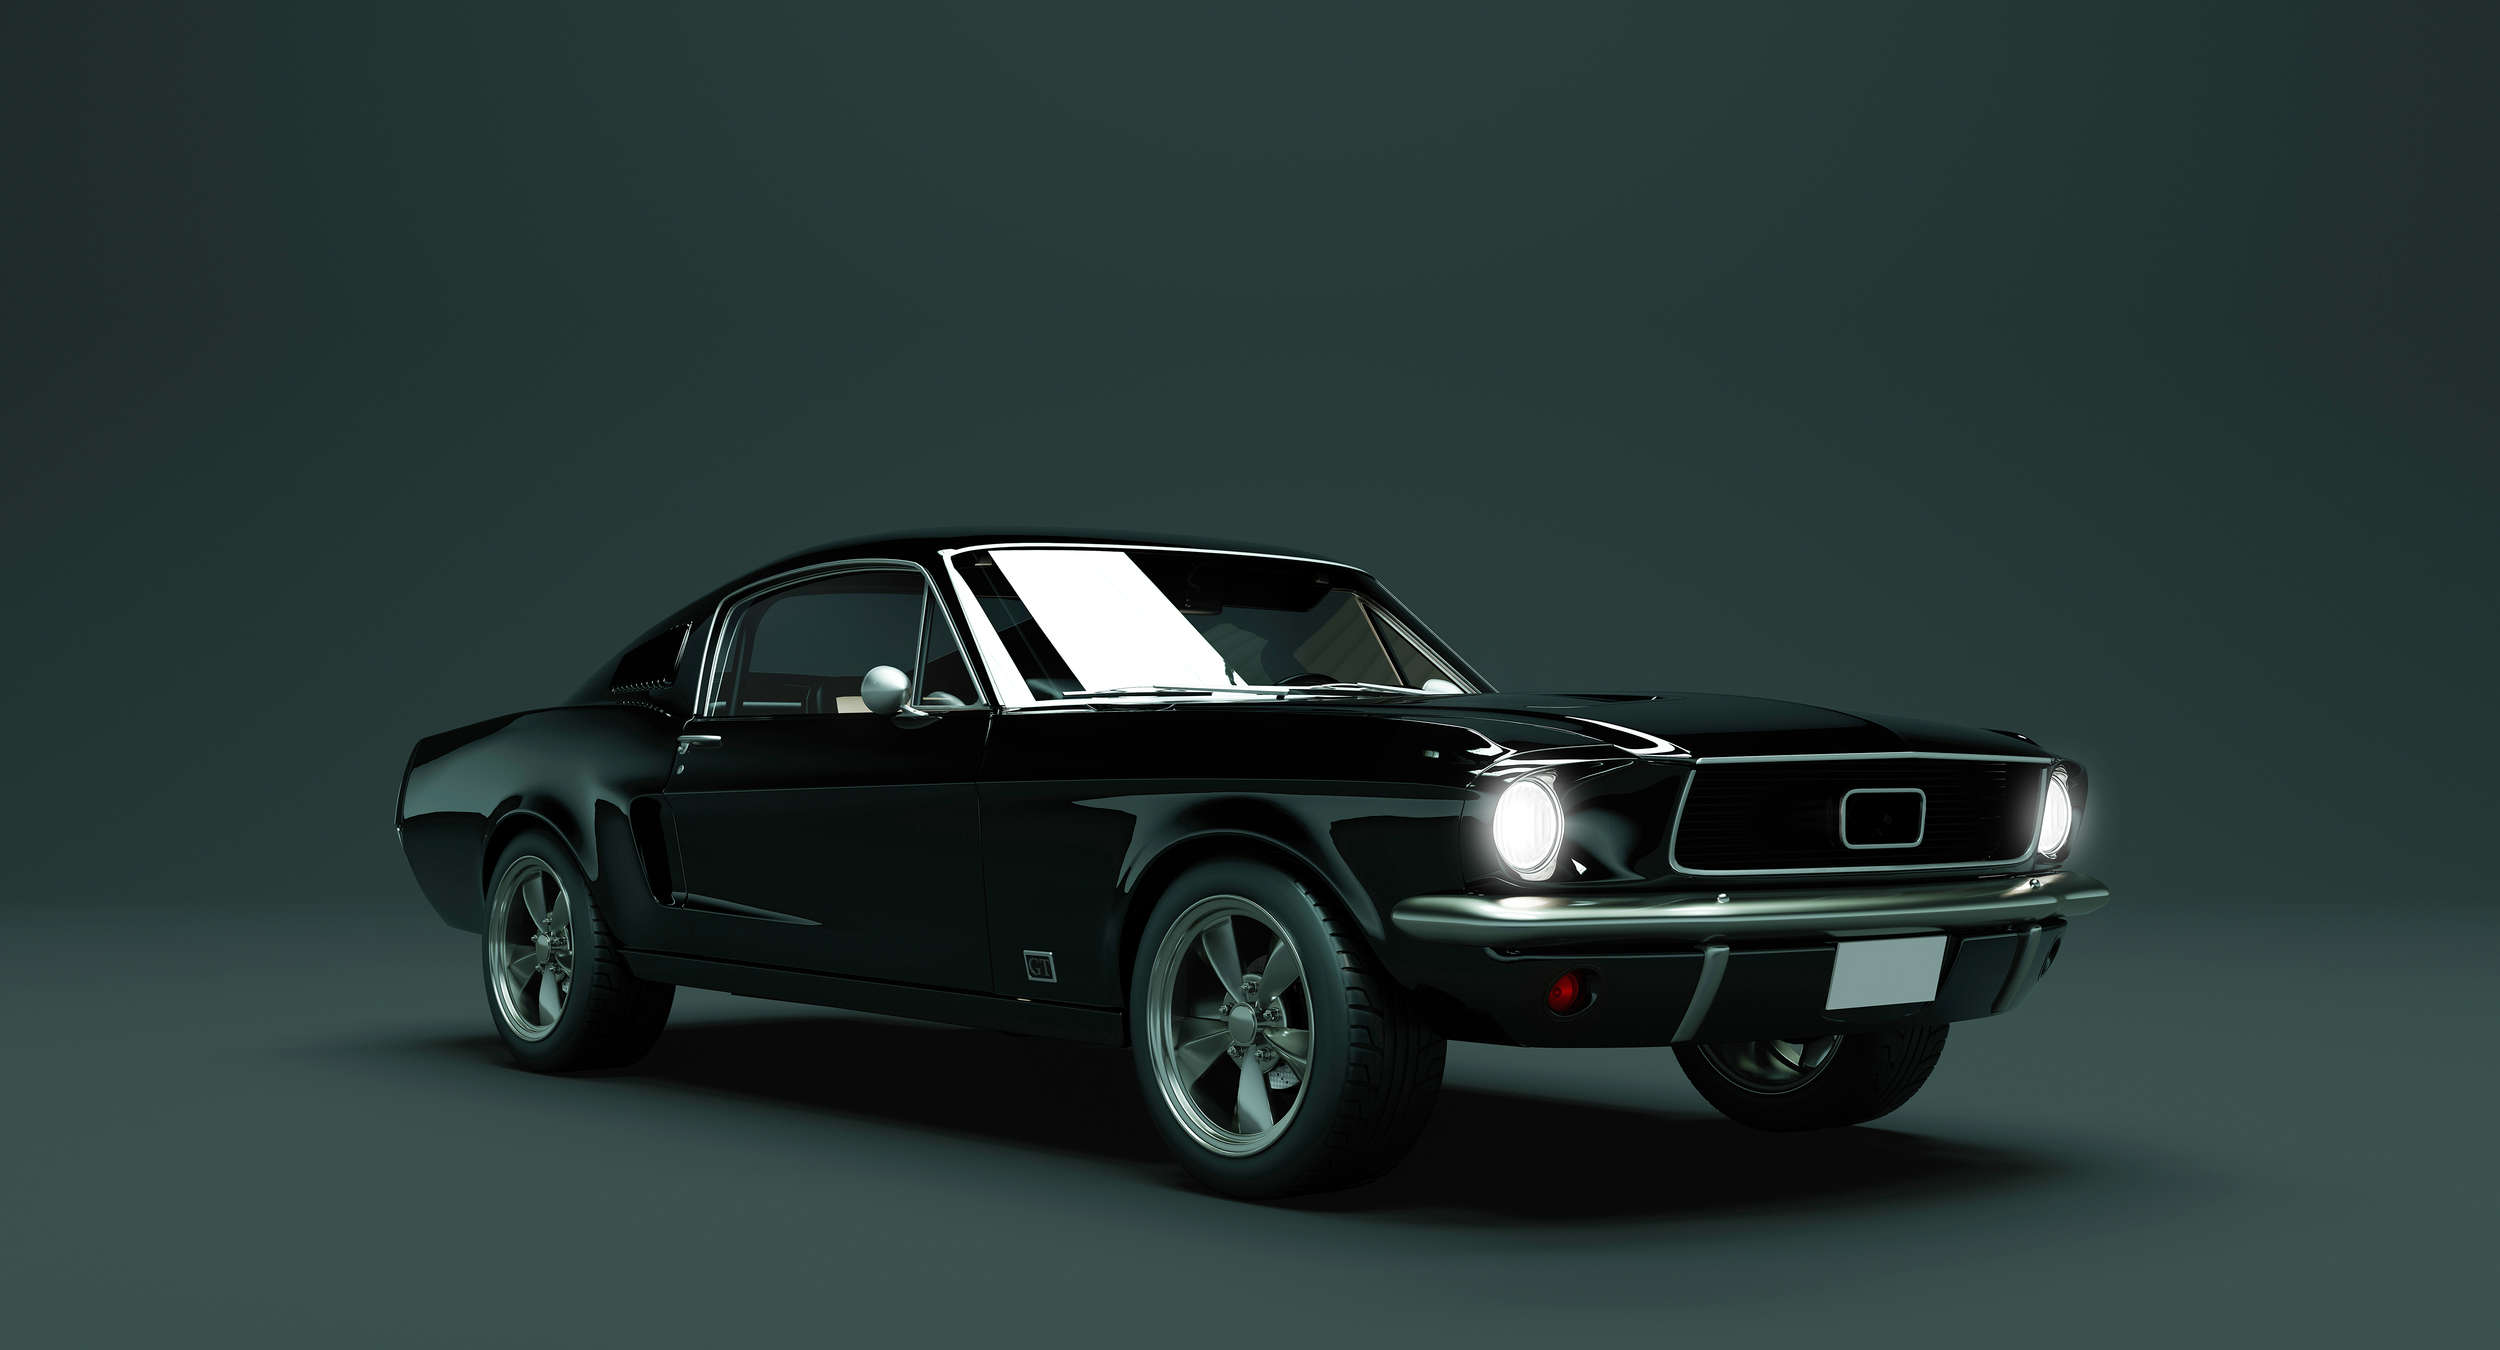             Mustang 2 - Fotomurali, auto d'epoca Mustang 1968 - Blu, nero | Pile liscio premium
        